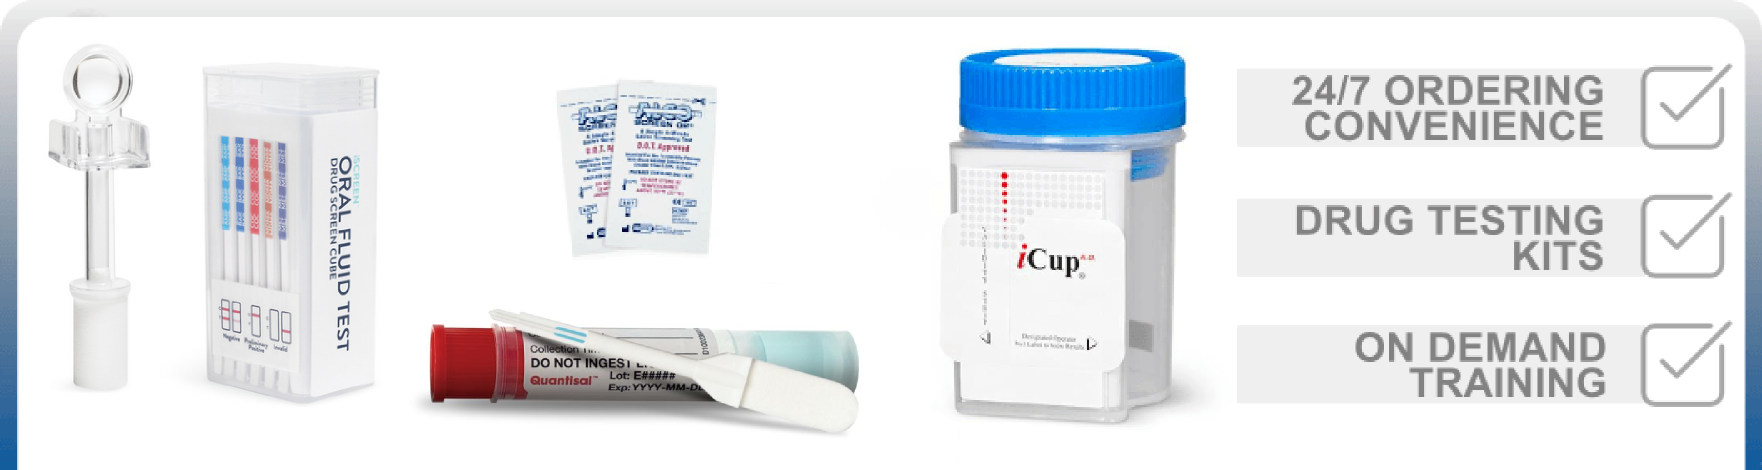 Drug Free Workplace Store Drug Testing Kits